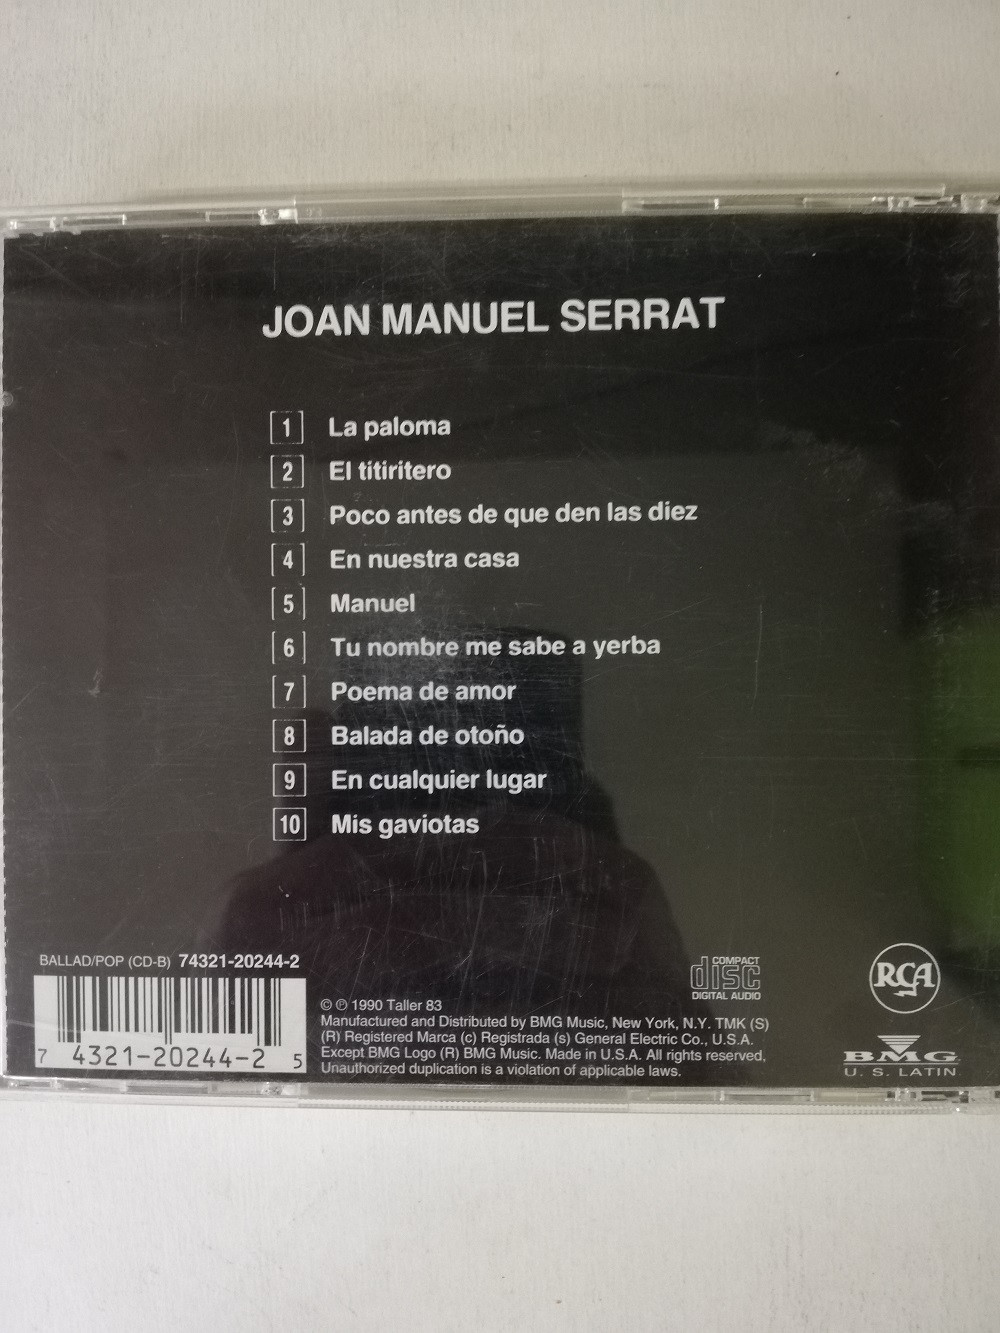 Imagen CD JOAN MANUEL SERRAT - JOAN MANUEL SERRAT 2